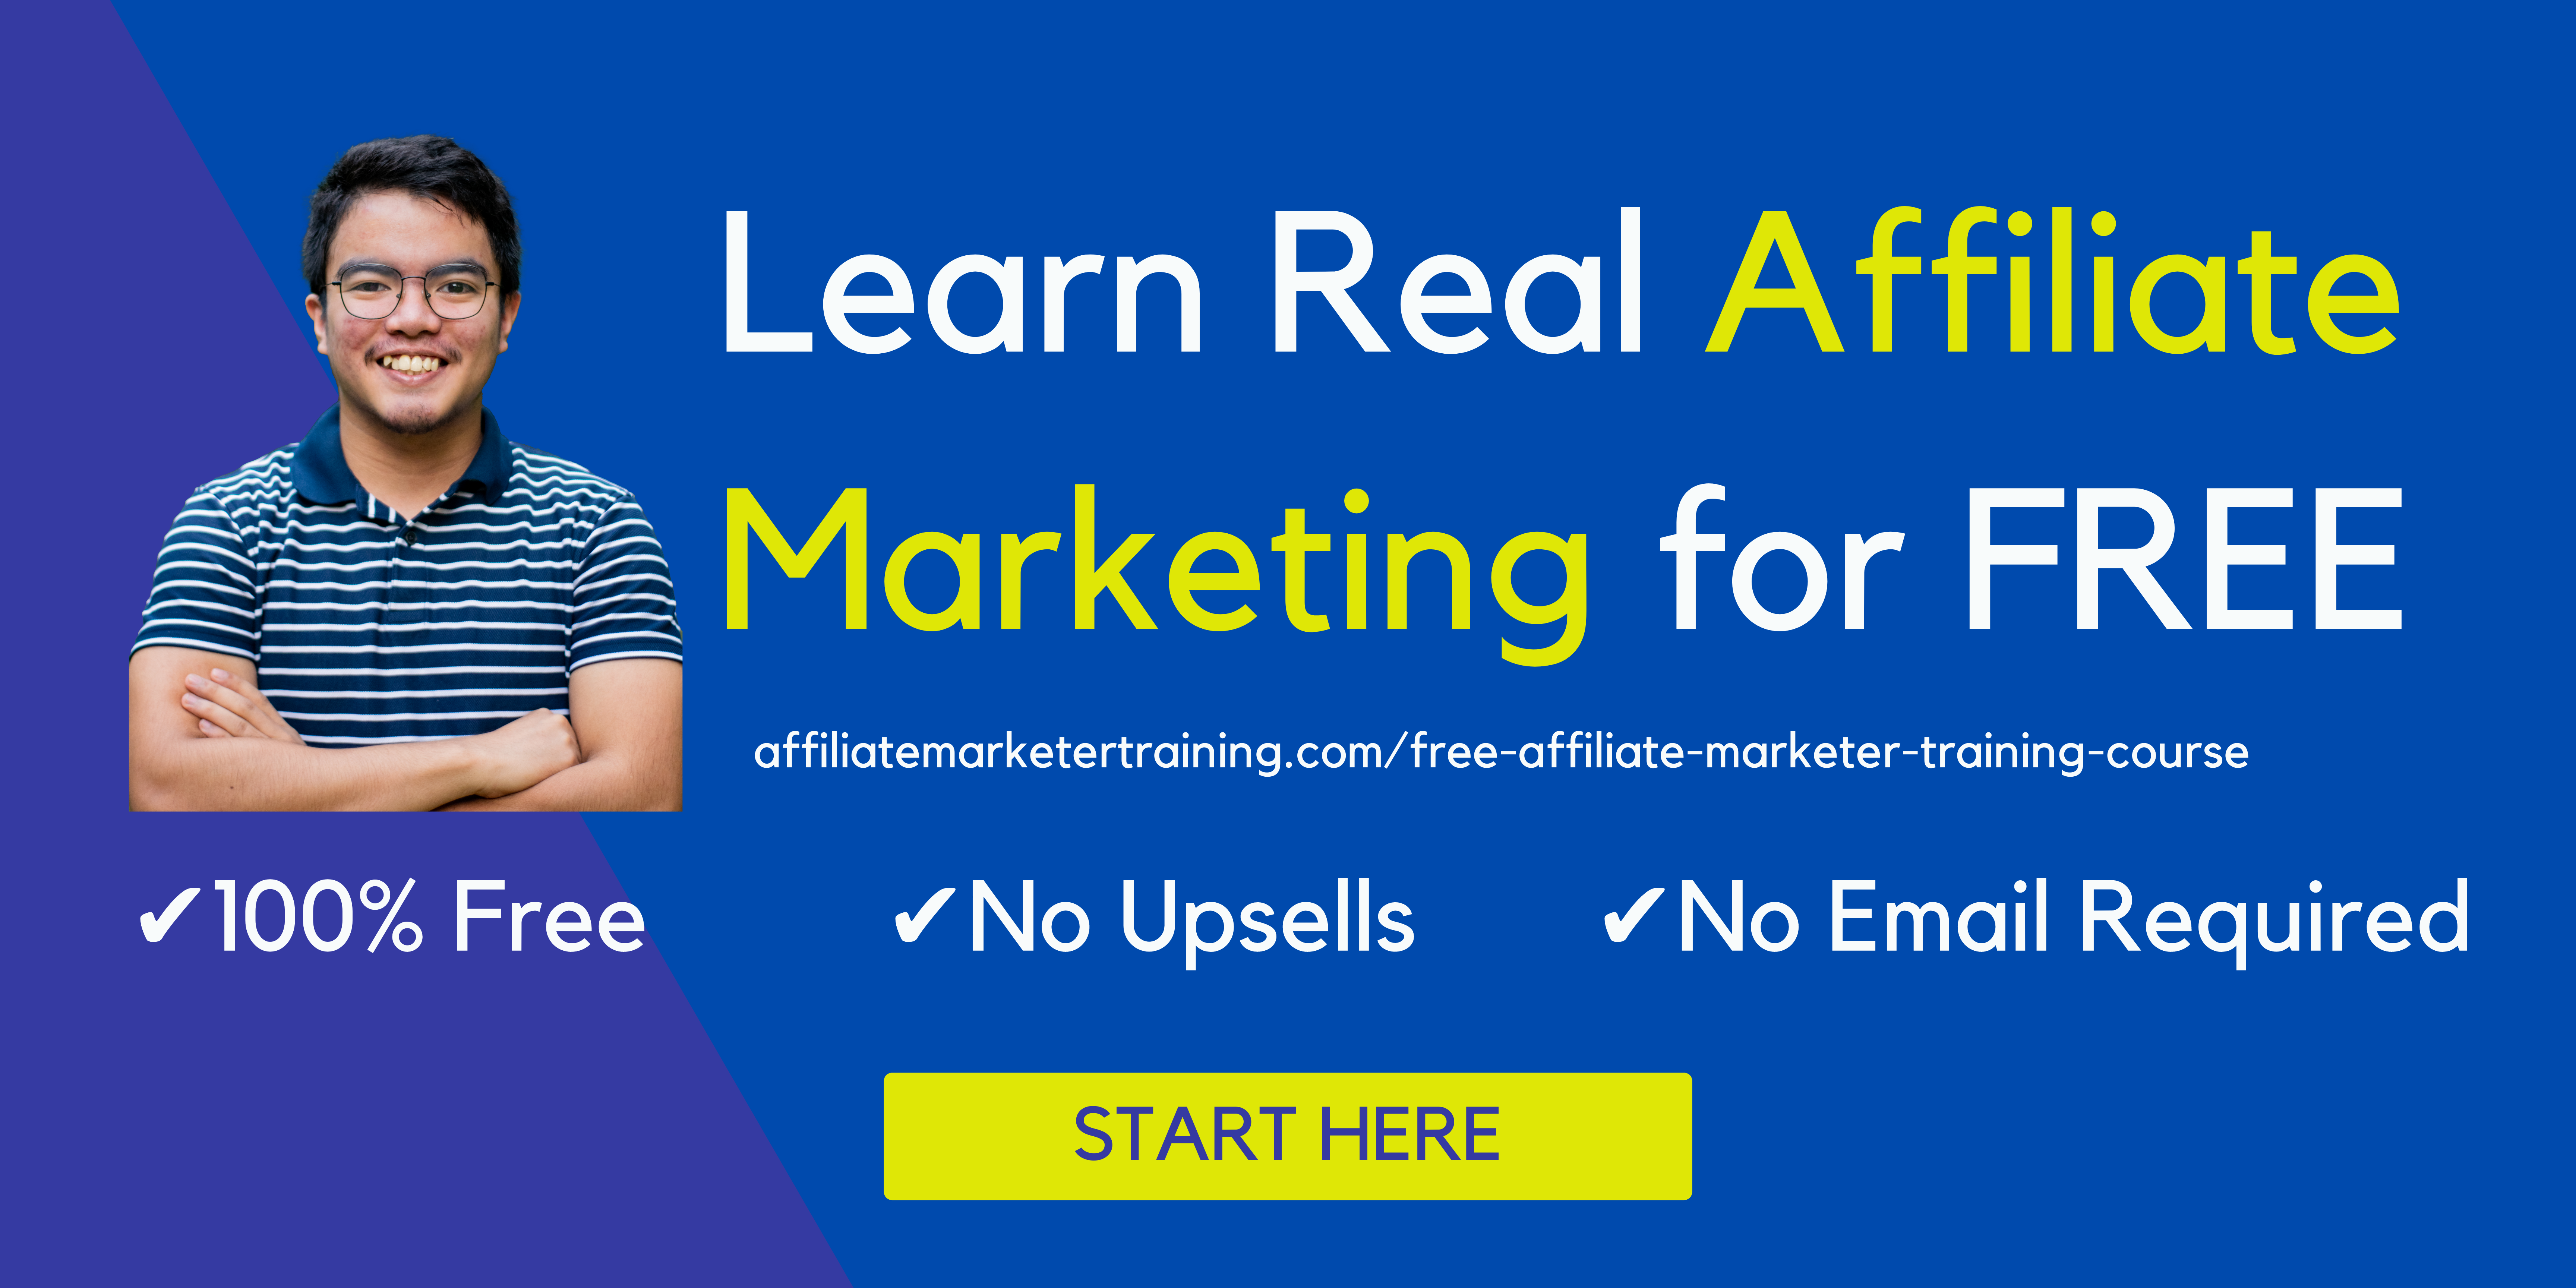 FREE Affiliate Marketing Course 2